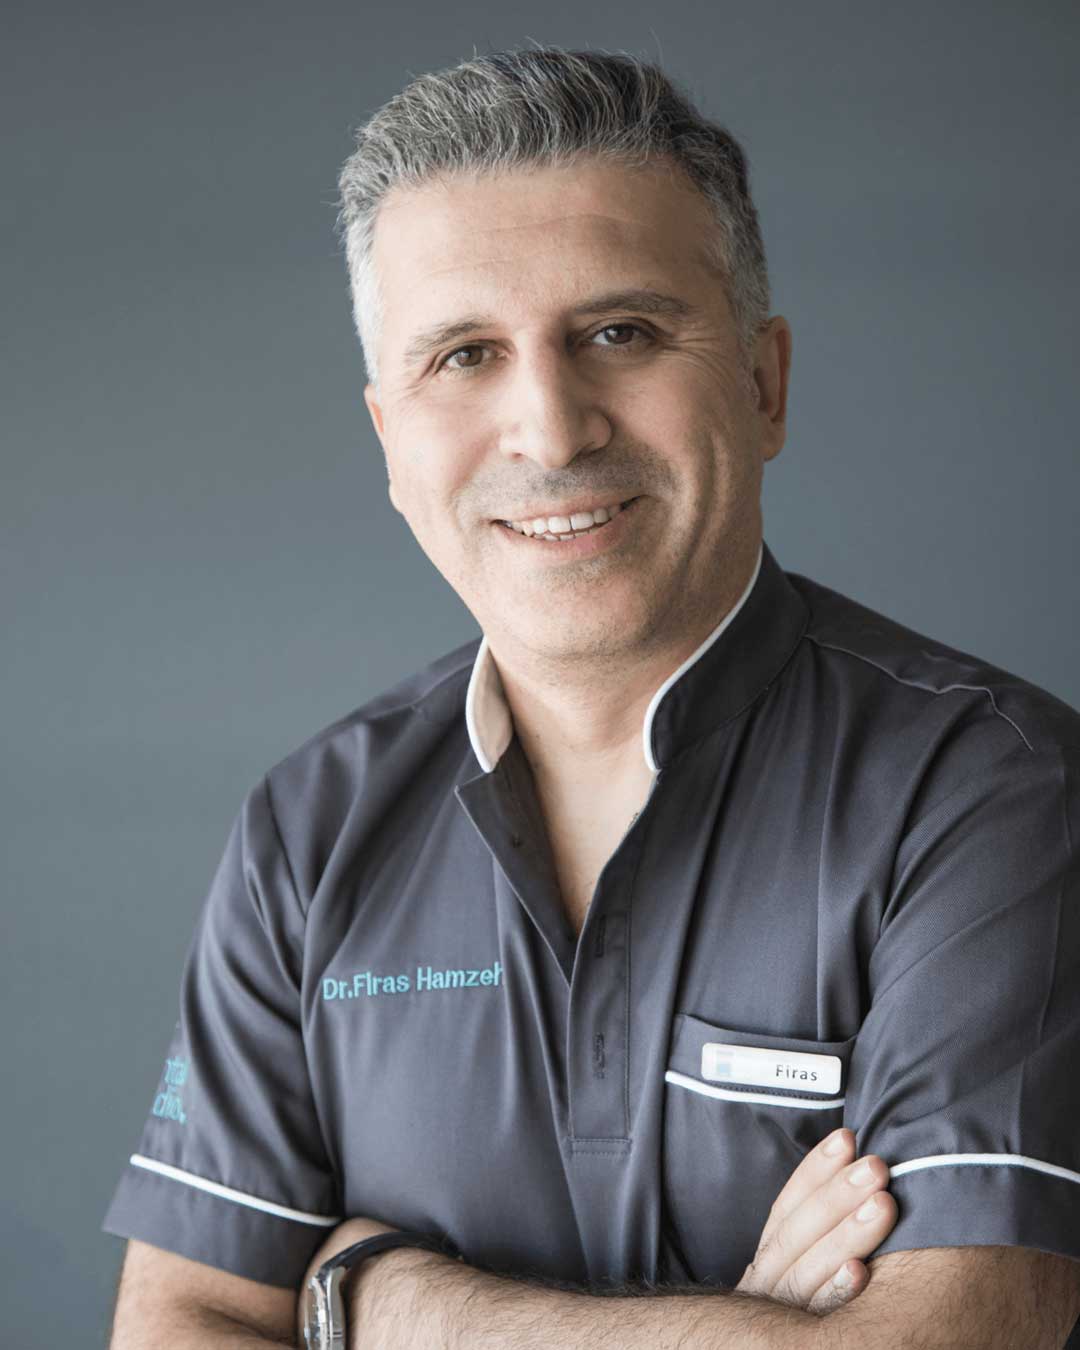 Orthodotist Dr. Firas Hamzeh